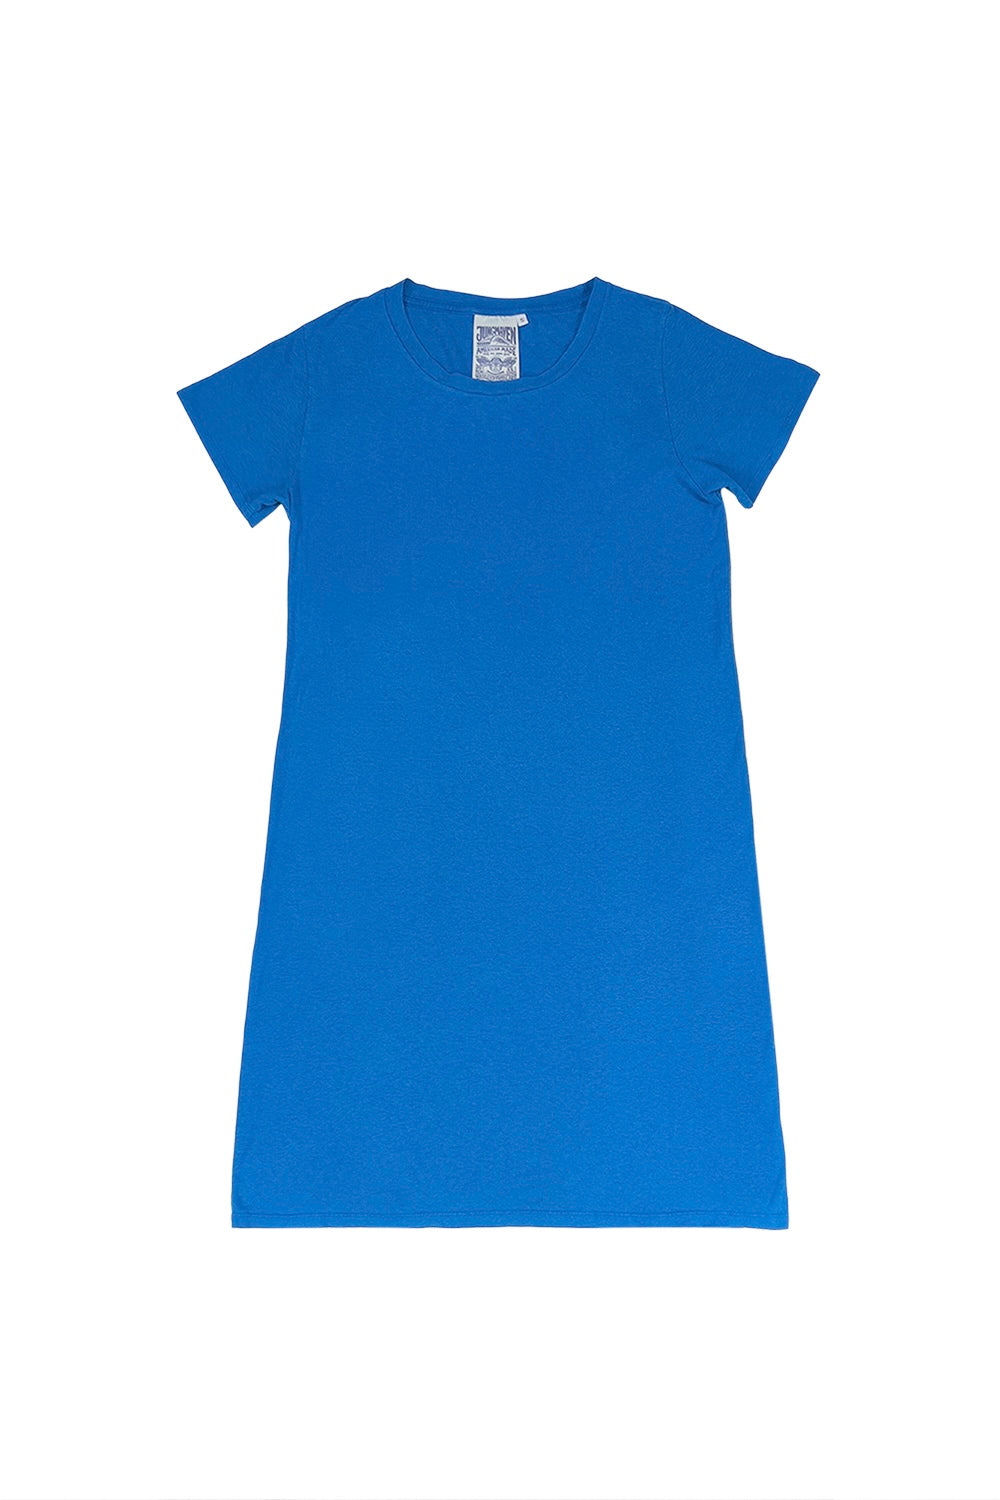 Mazama Dress | Jungmaven Hemp Clothing & Accessories / Color: Galaxy Blue